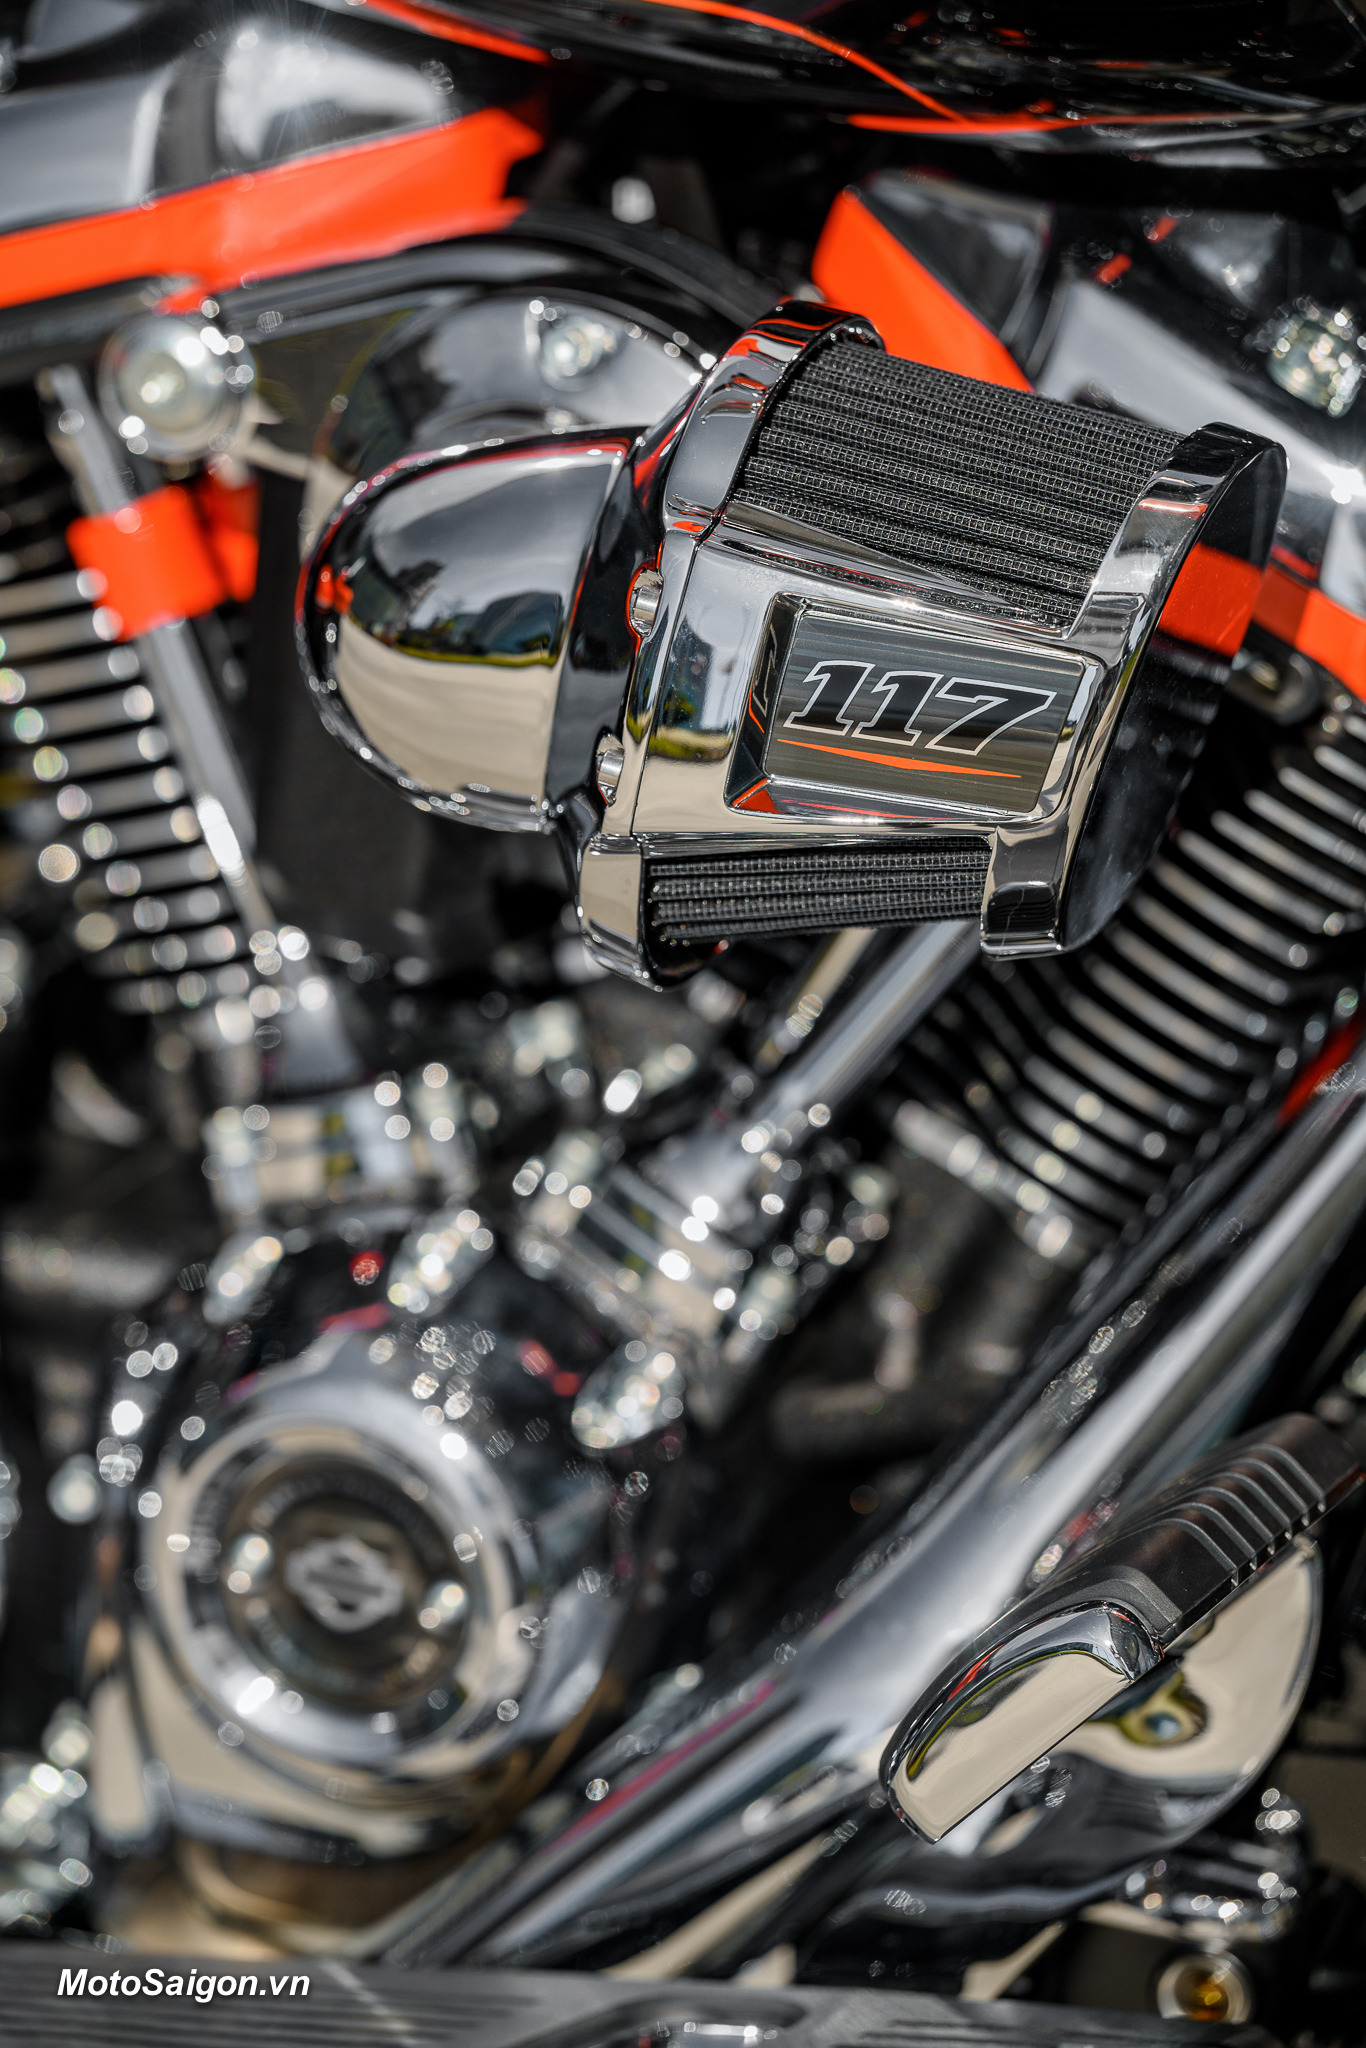 Harley-Davidson 2022